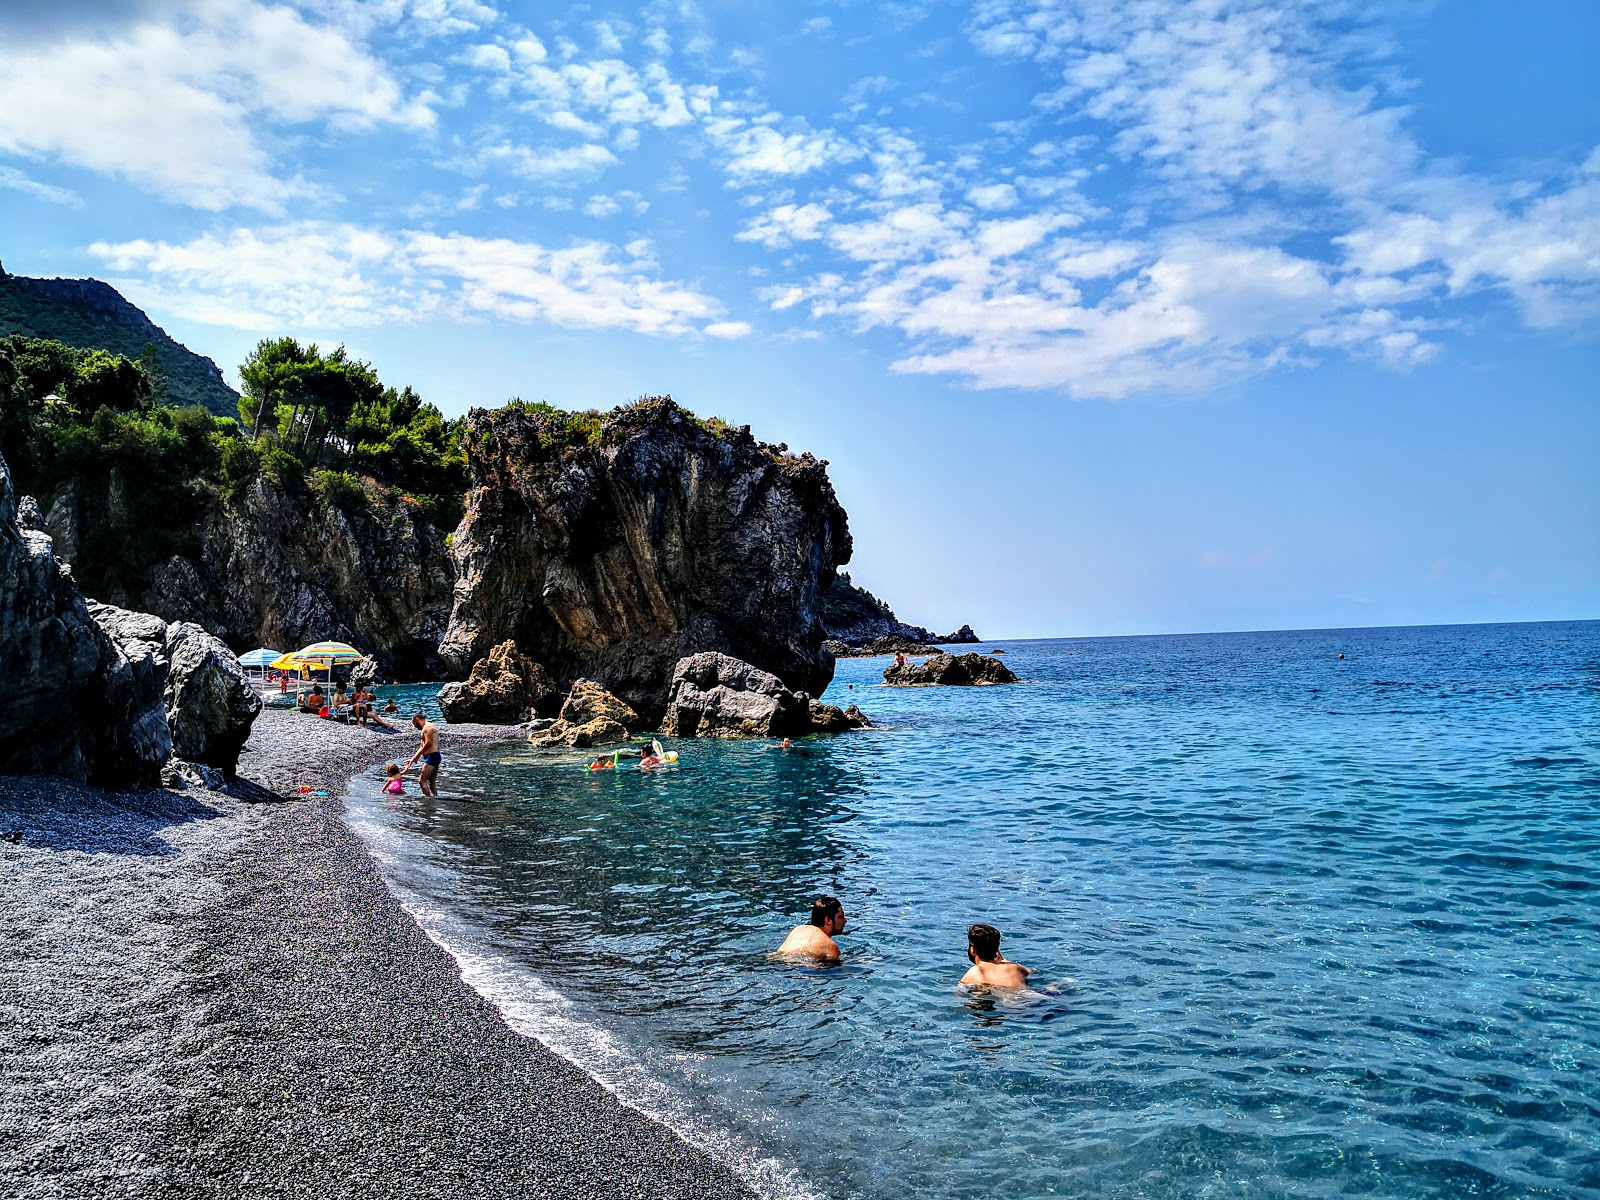 Foto von Spiaggia di Santa Teresa mit feiner grauer kies Oberfläche